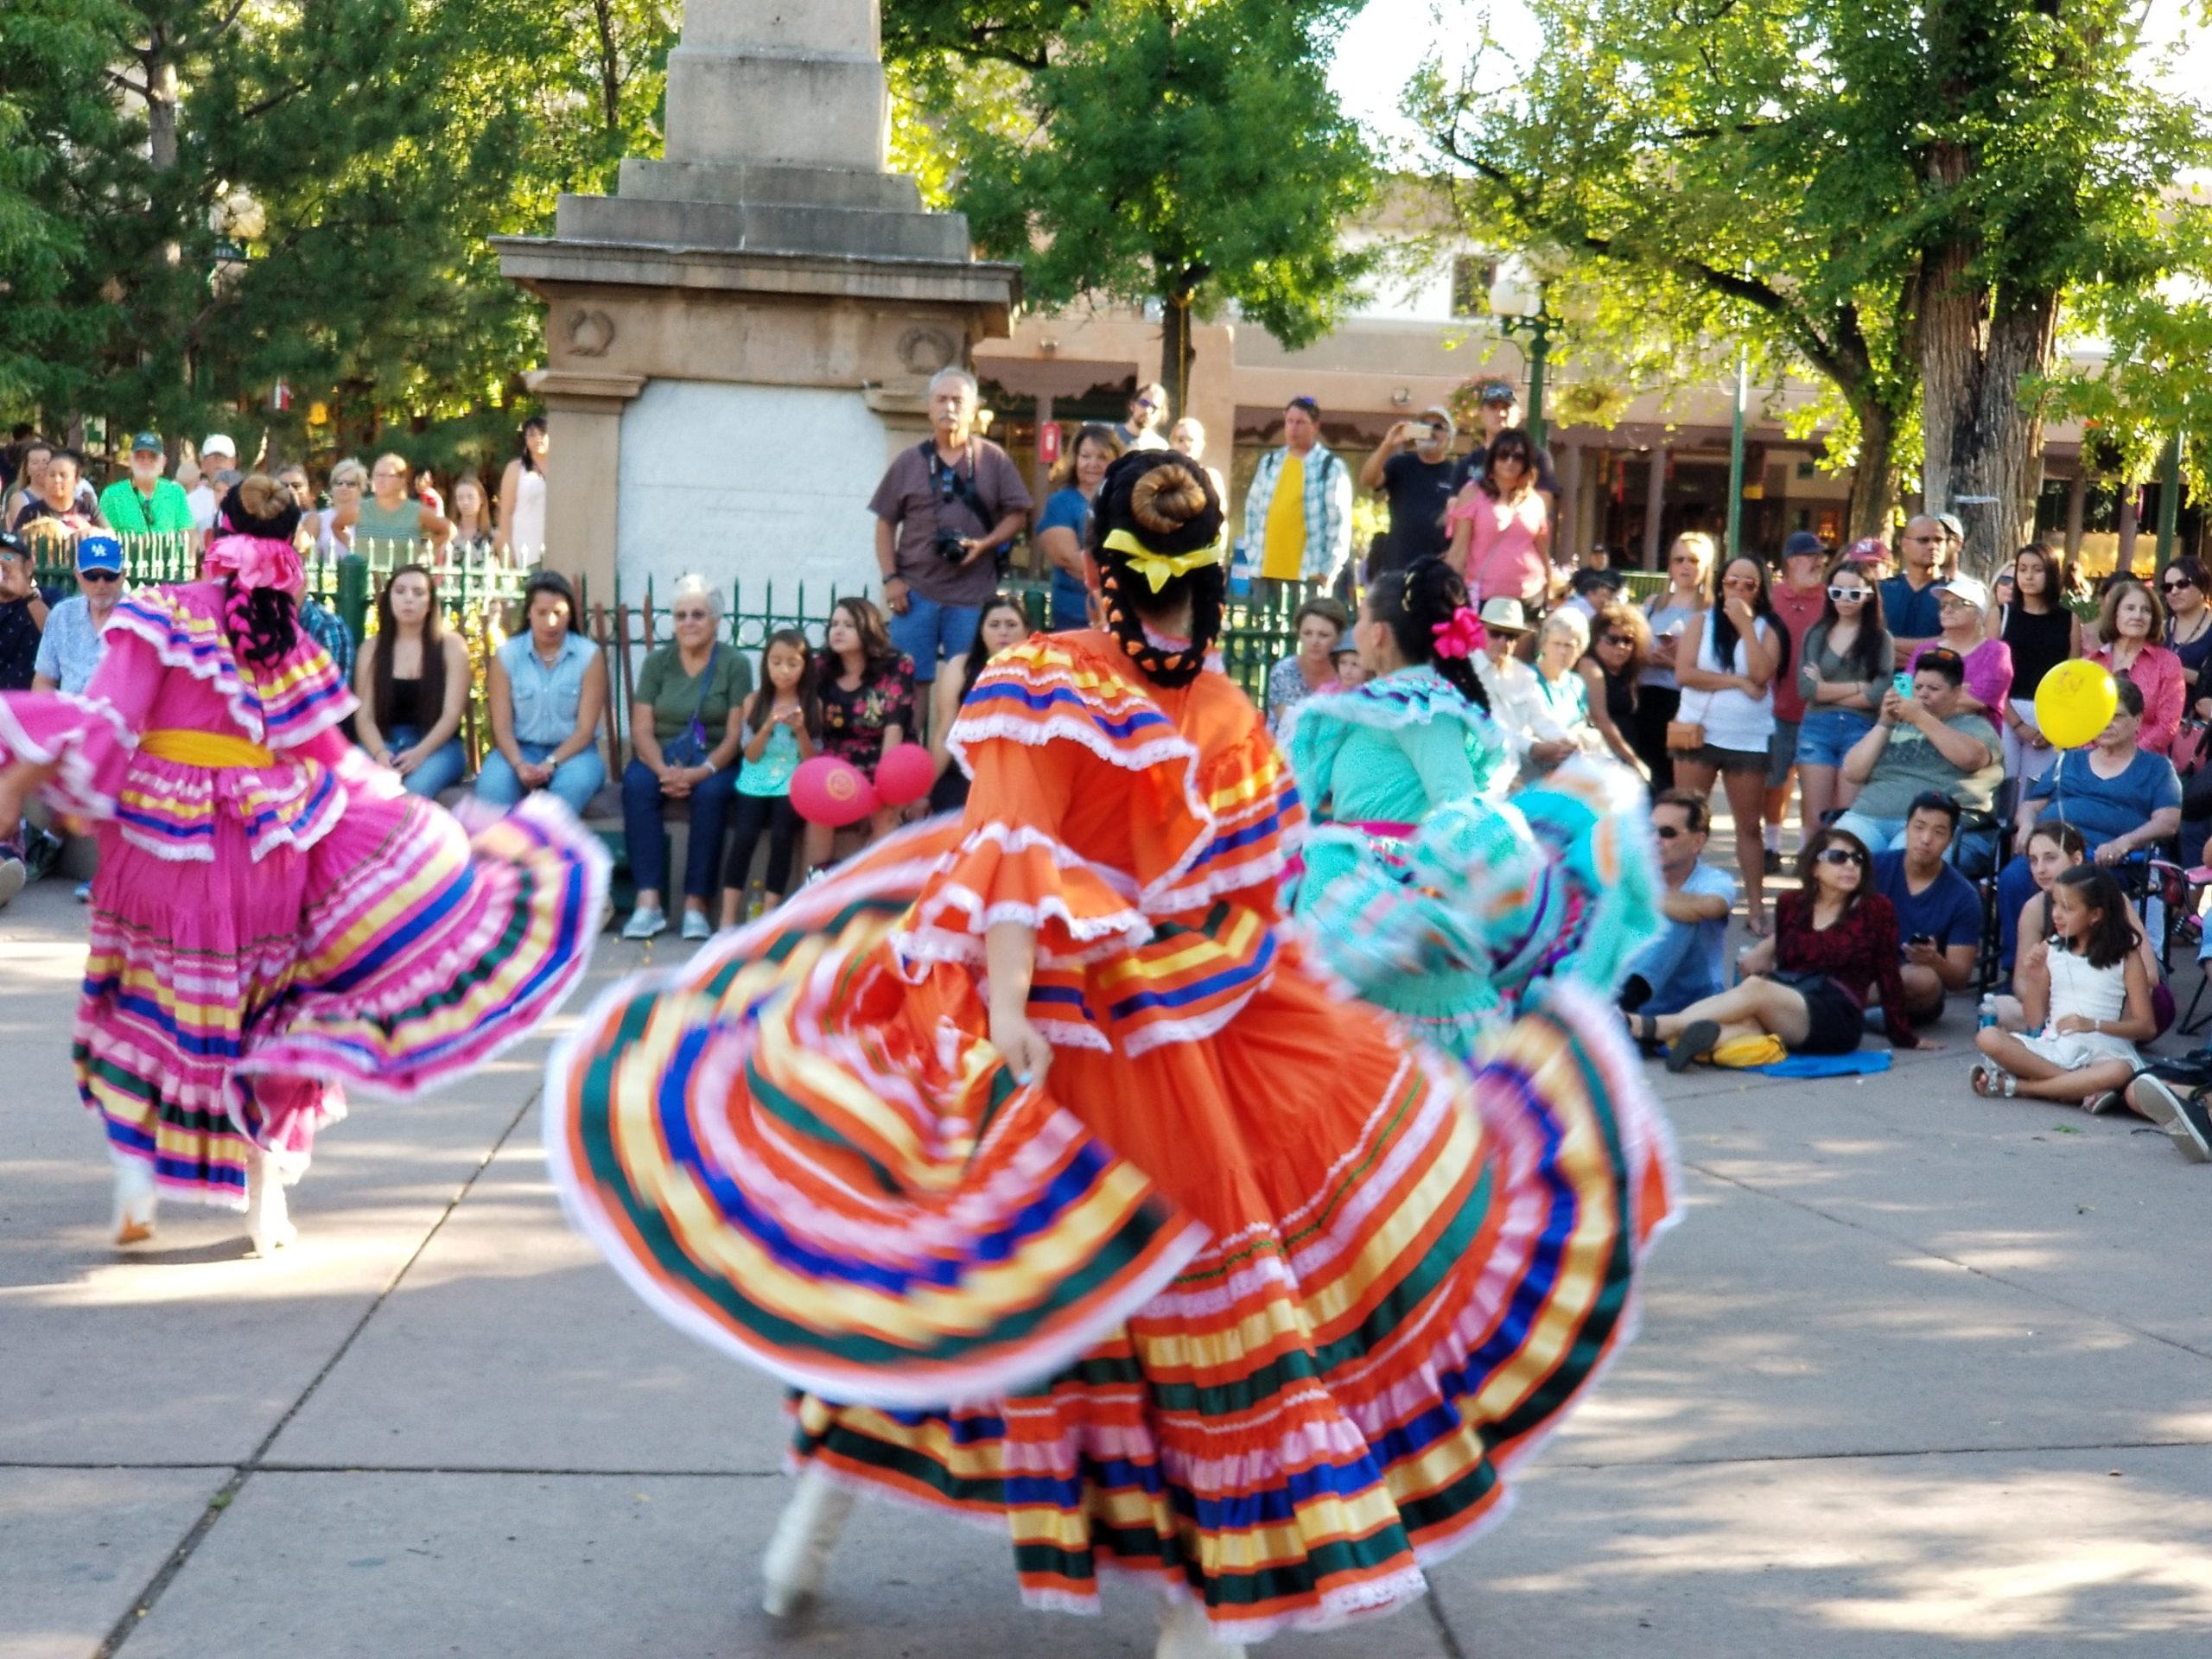 flamenco dancers entertaining crowd